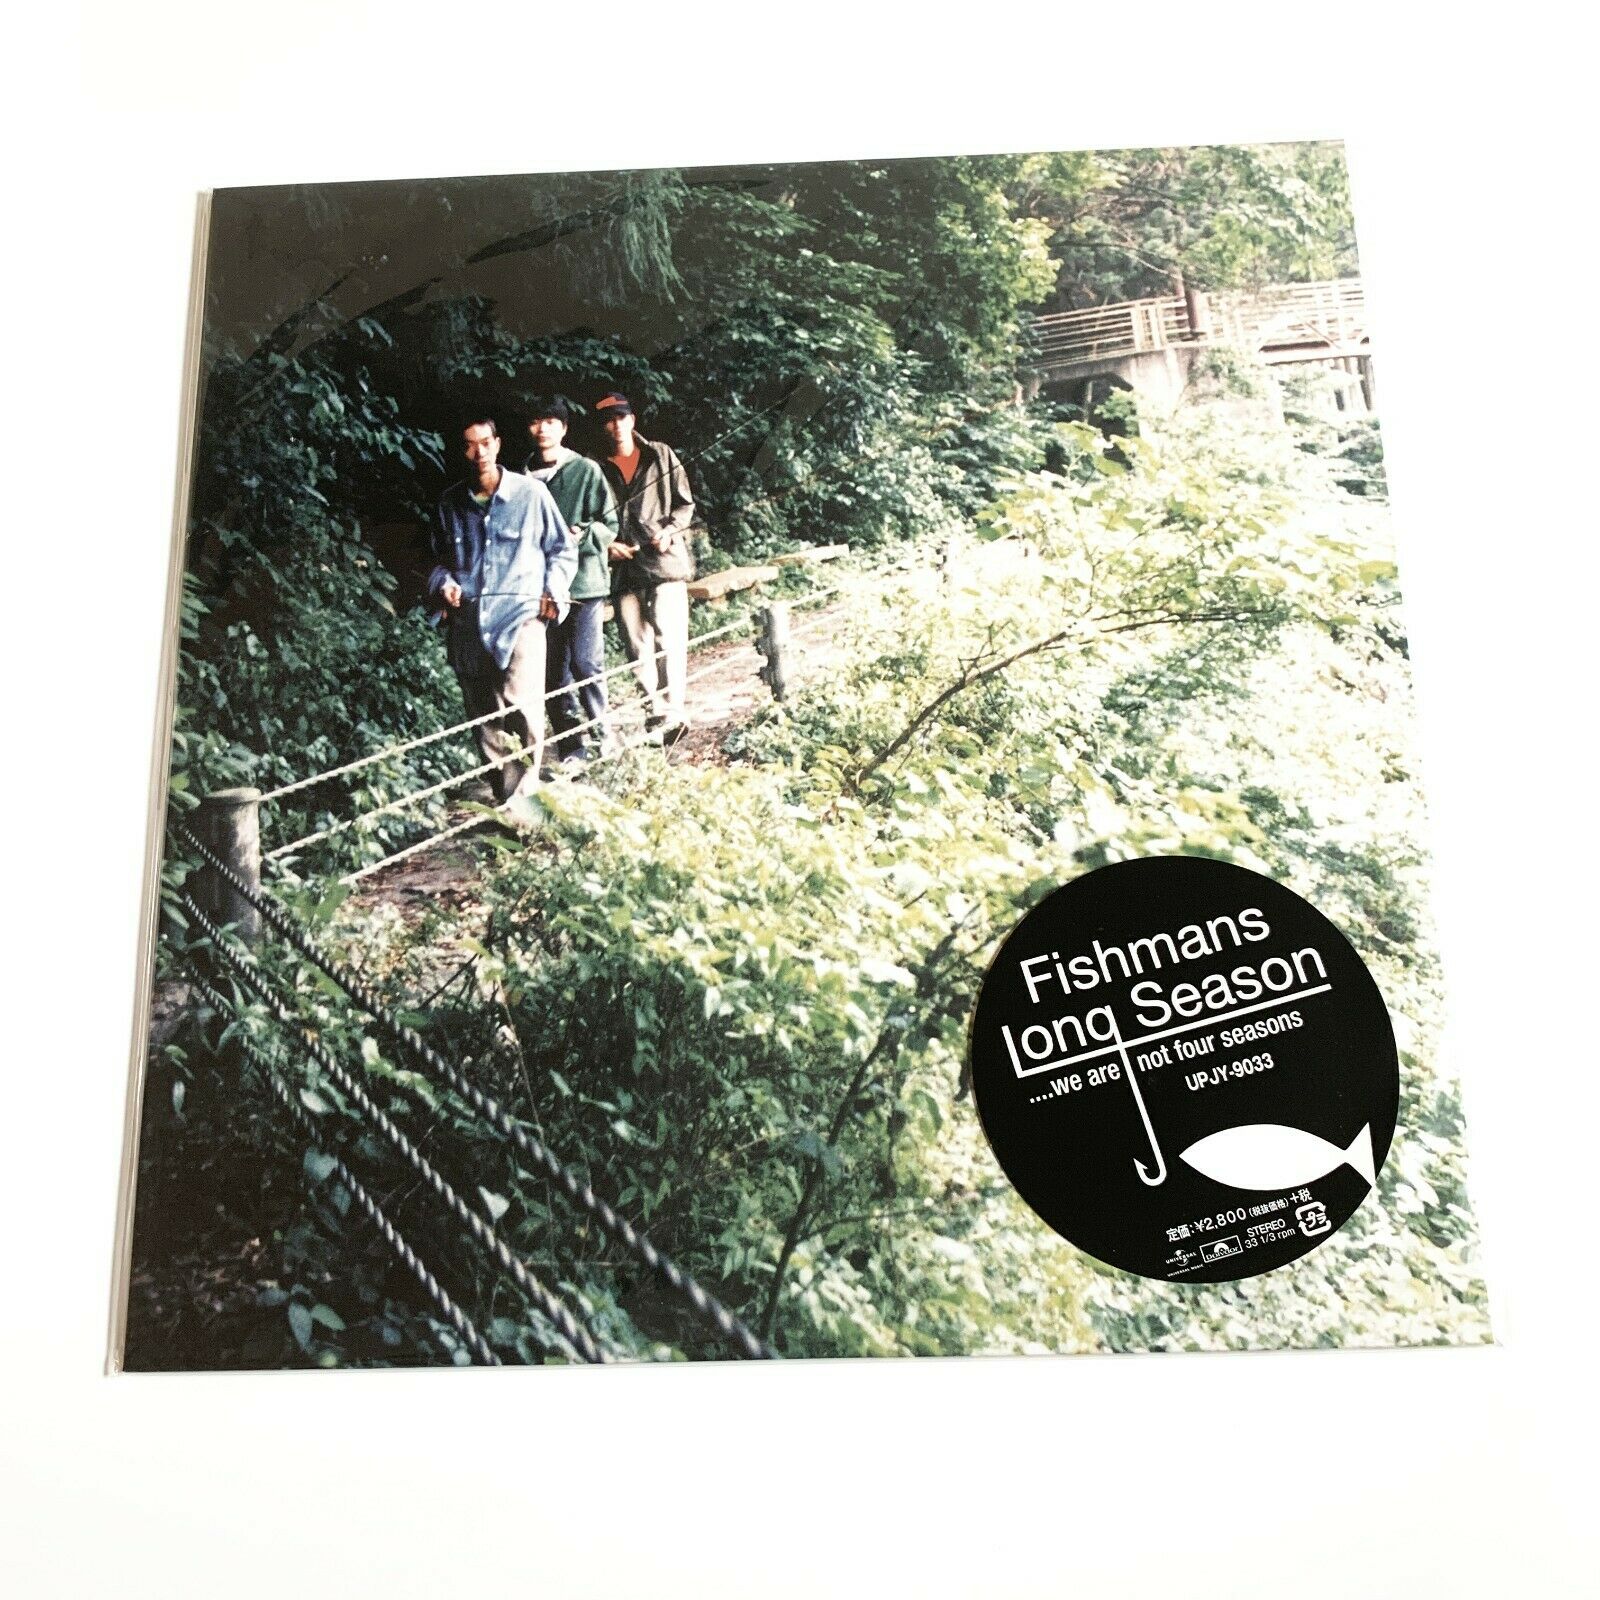 Pic 1 Fishmans Long season vinyl LP Rare Japan press sealed dream pop